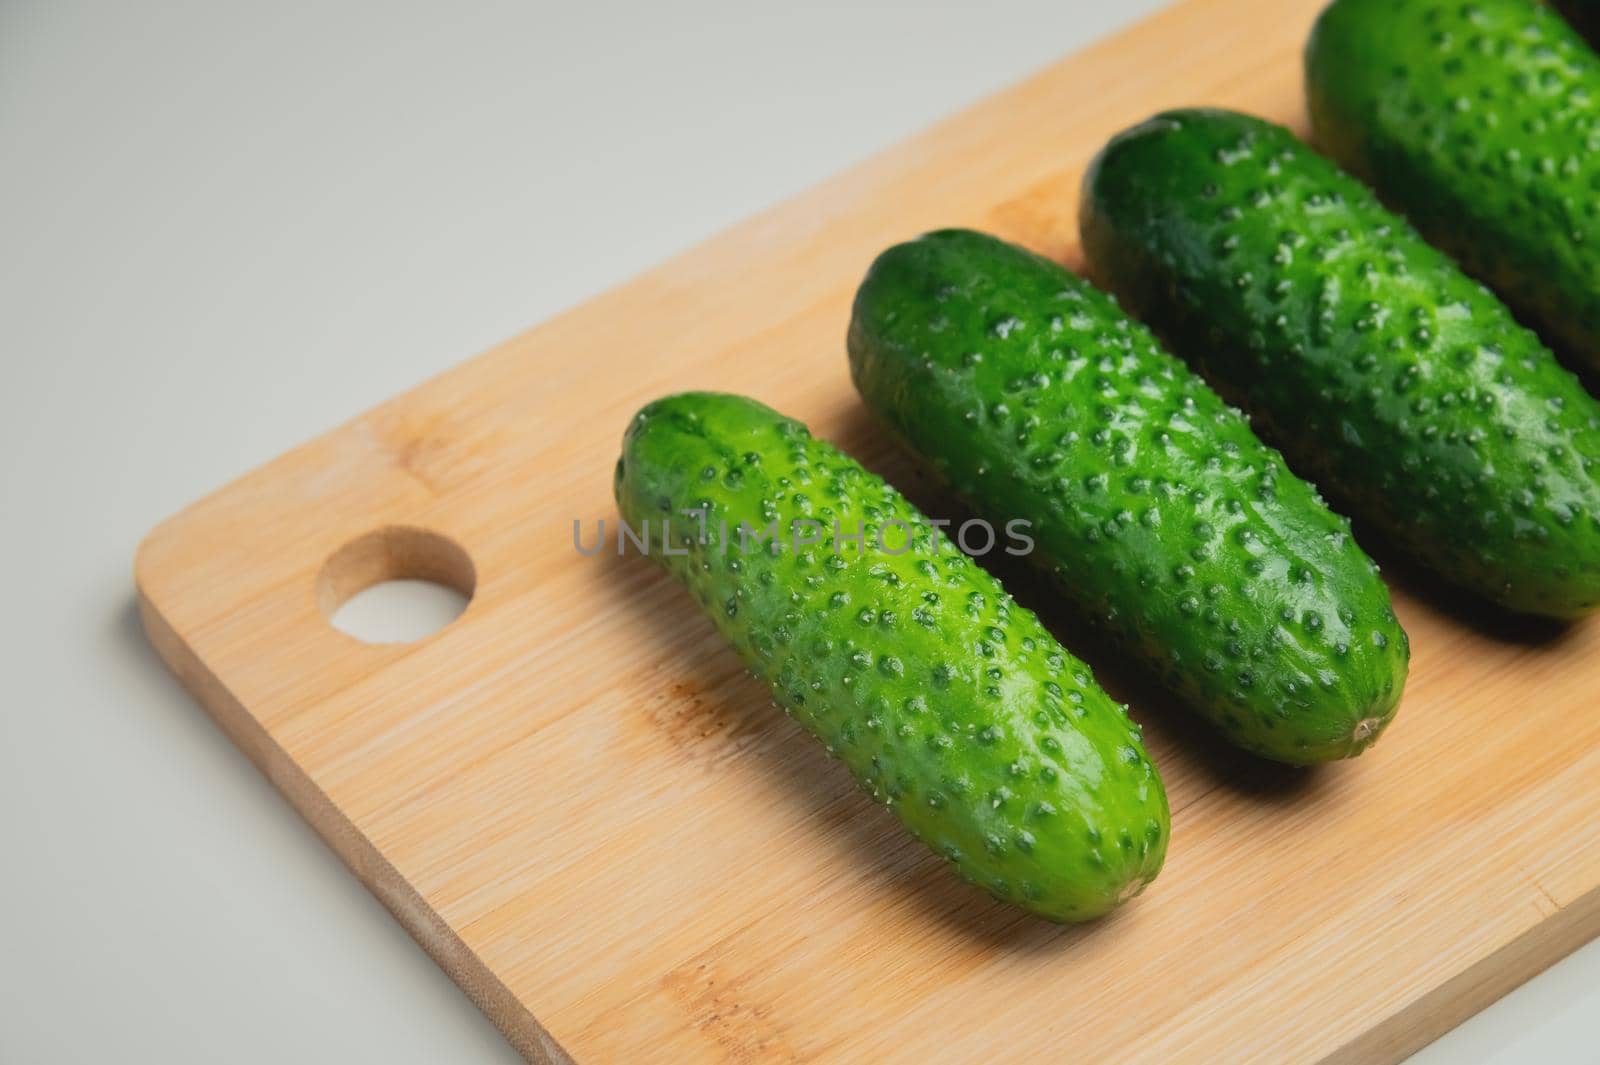 juicy ripe cucumber in half lies on a wooden cutting board, top view by yanik88